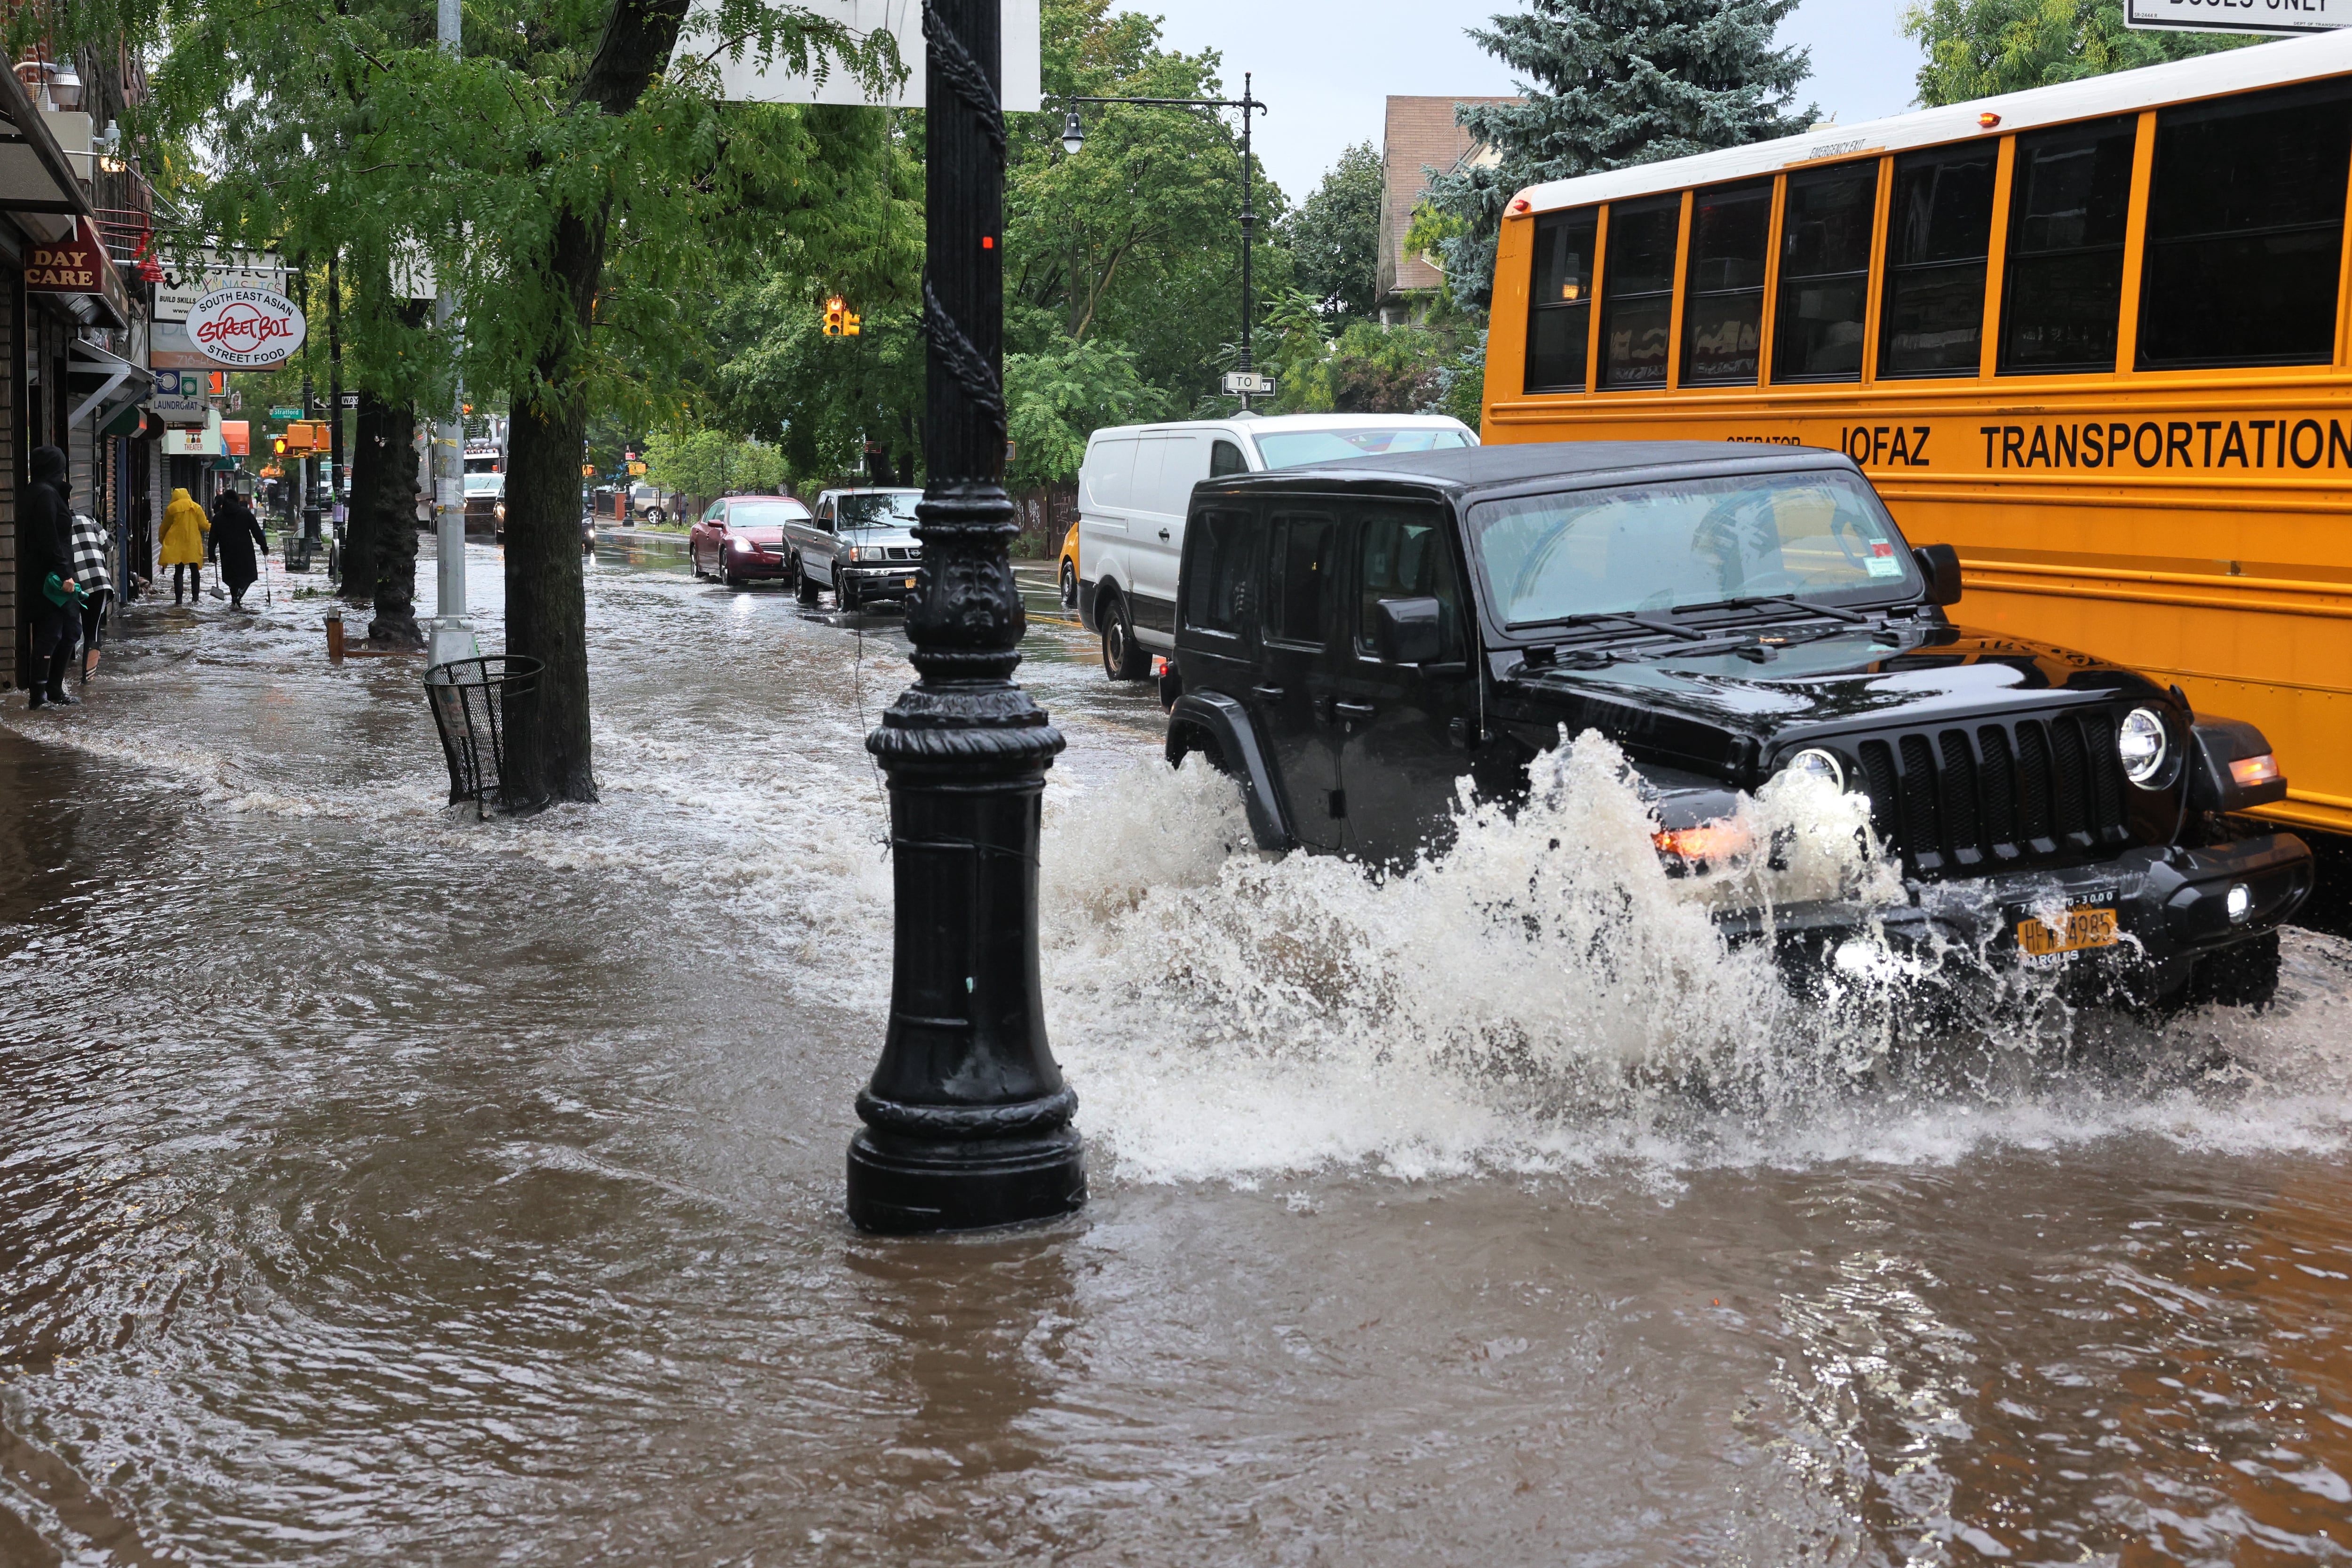 A Jeep kicks up a splash on a flooded street